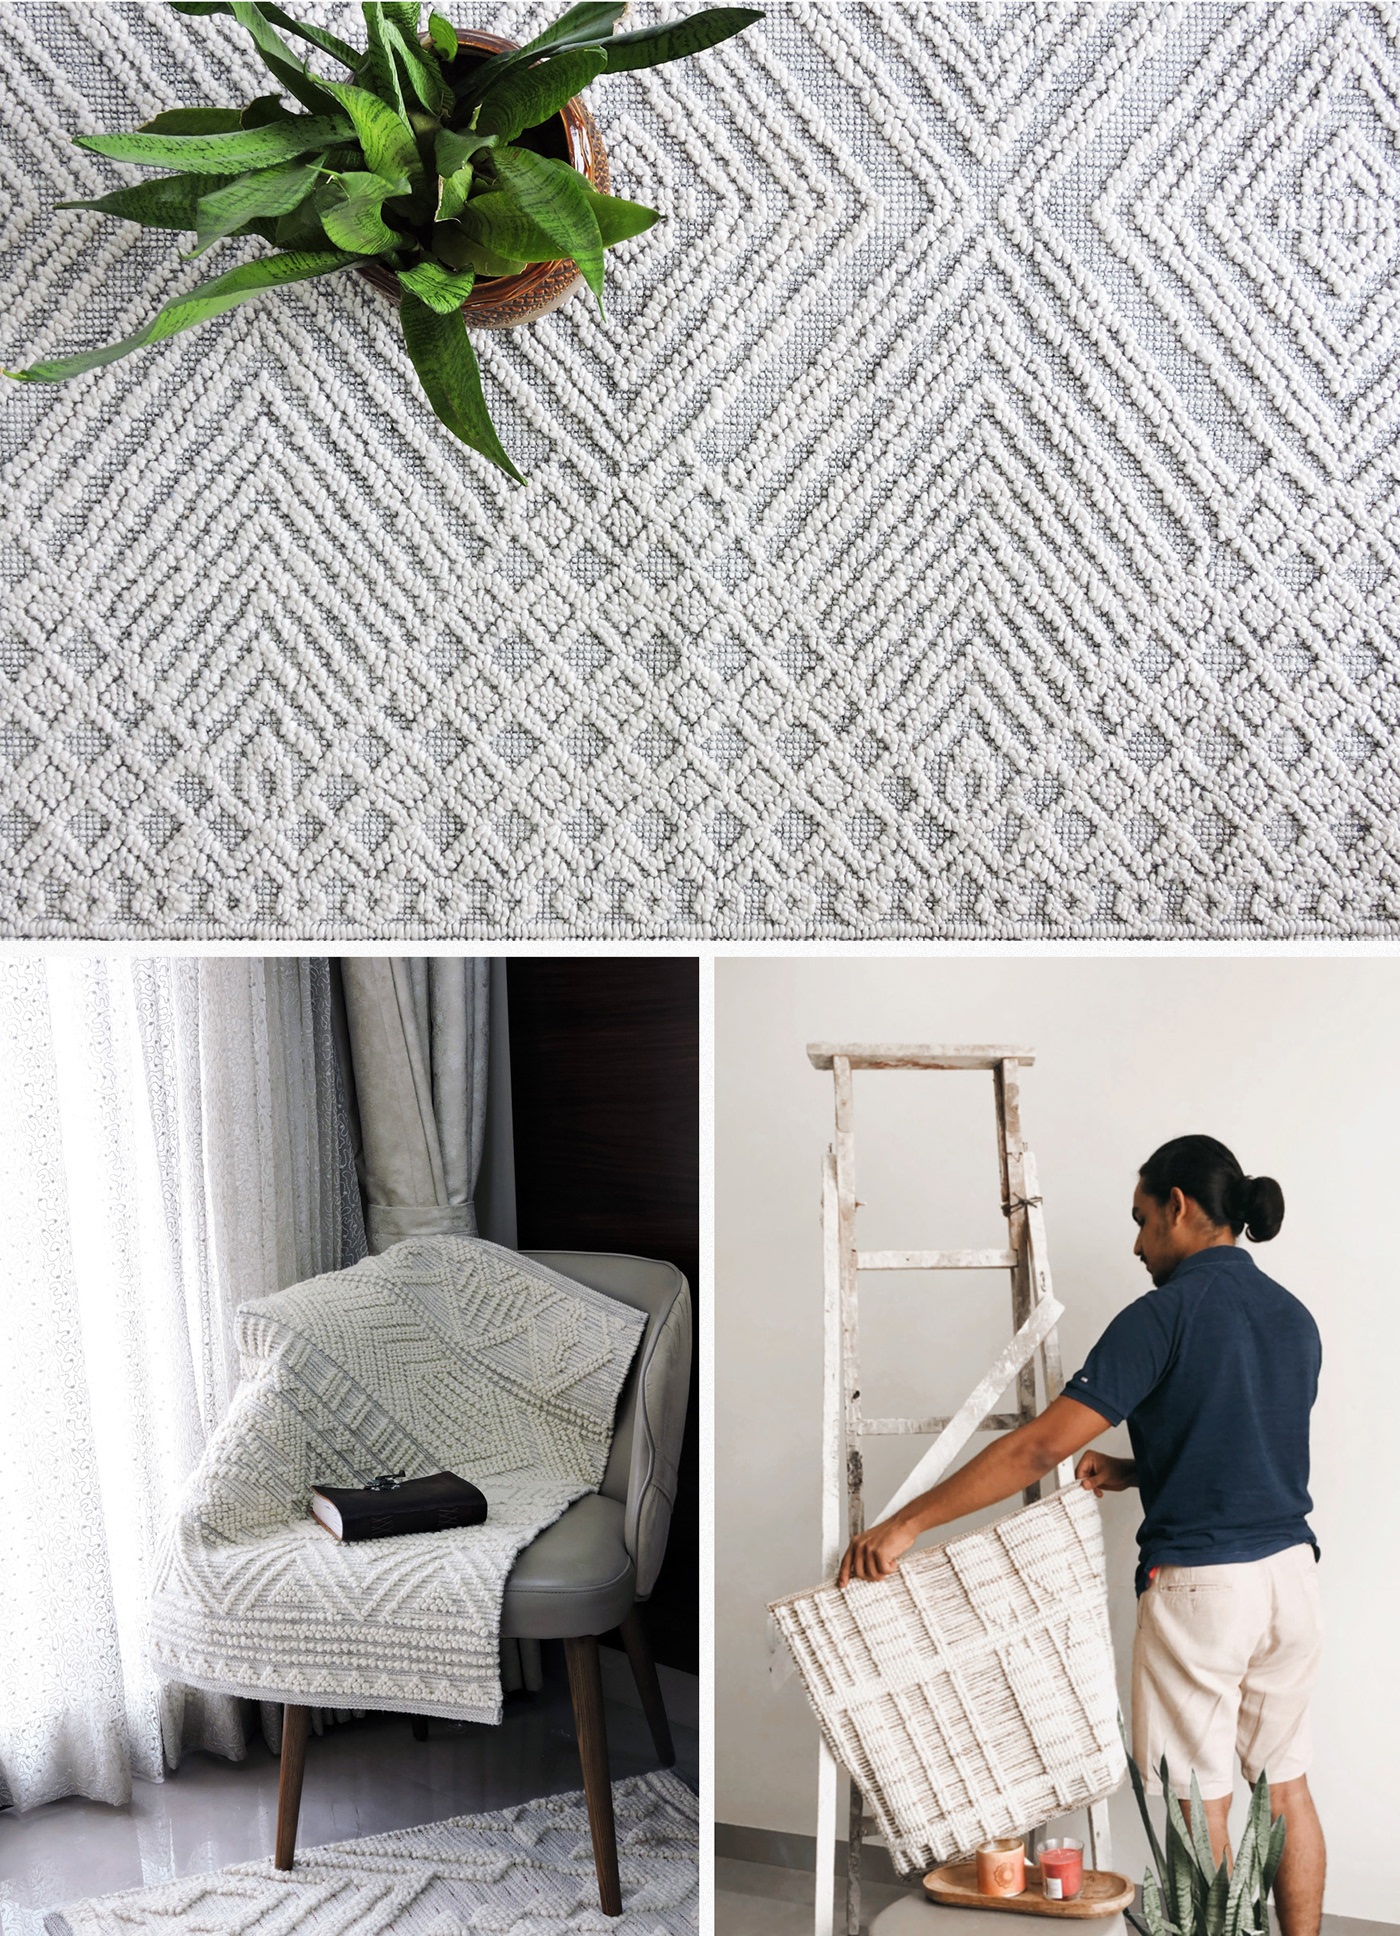 Diamond-Chevron geometric organic powerloom Retro-Modern Sustainable texture weaving rugs carpet